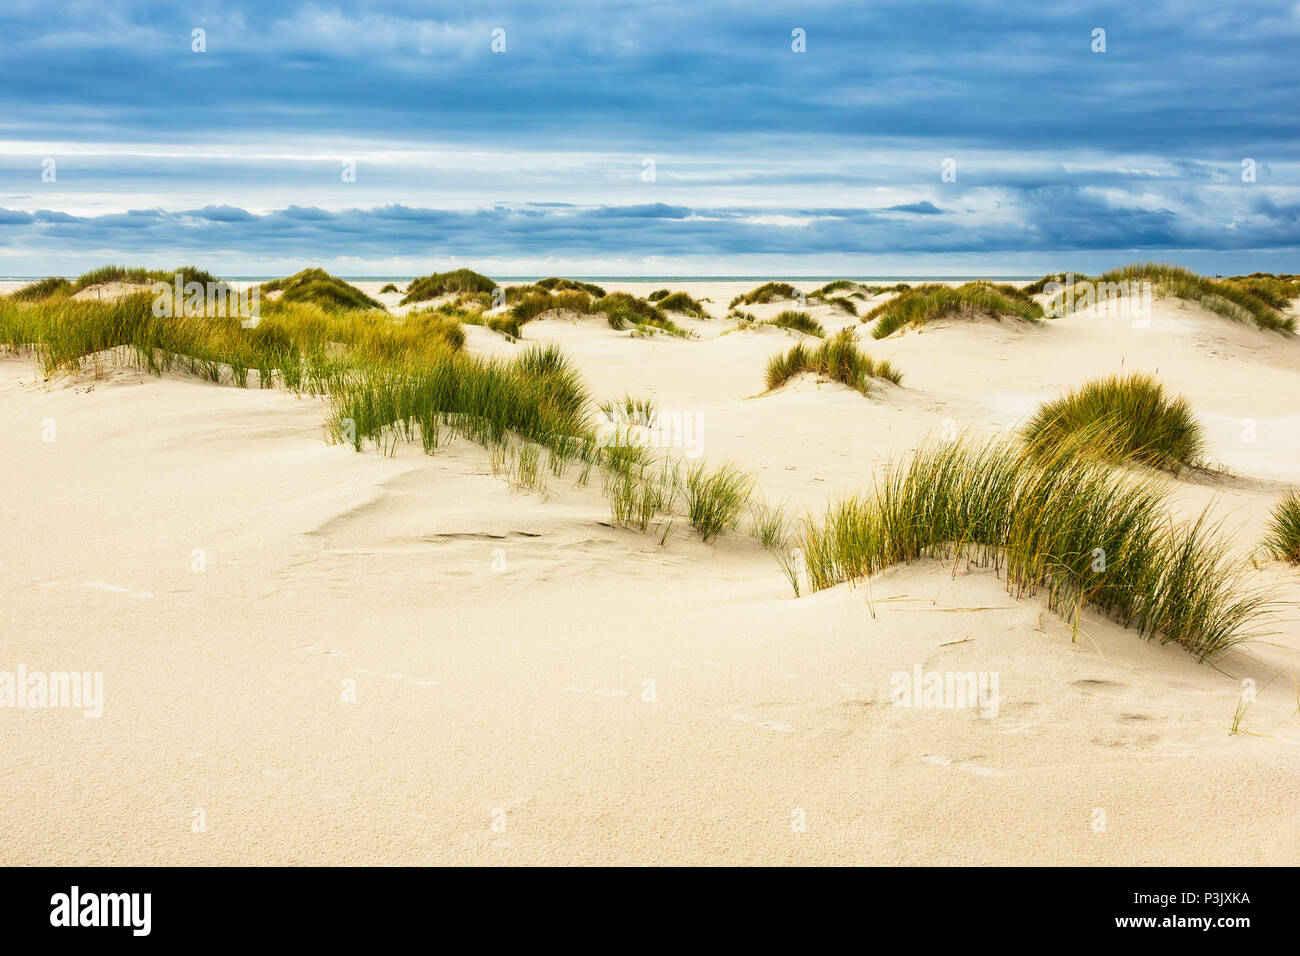 Dunes on the North Sea island Amrum, Germany. Stock Photo